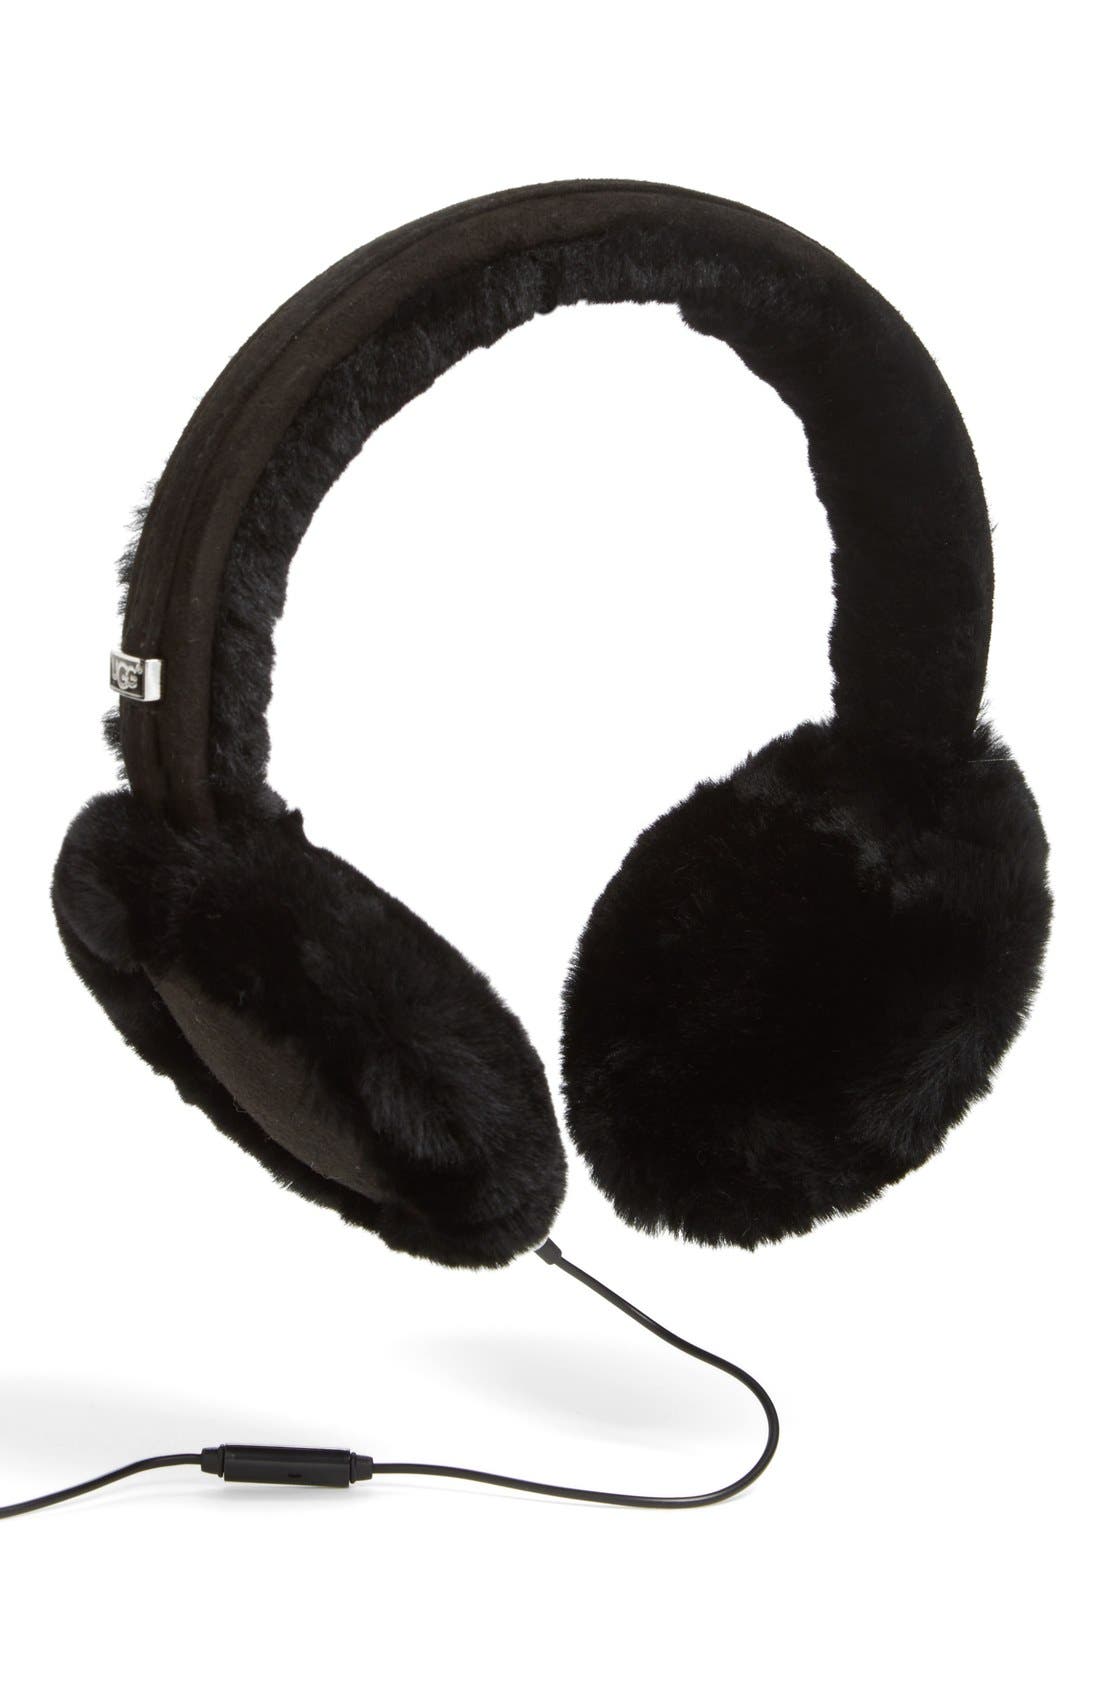 ugg earmuffs headphones